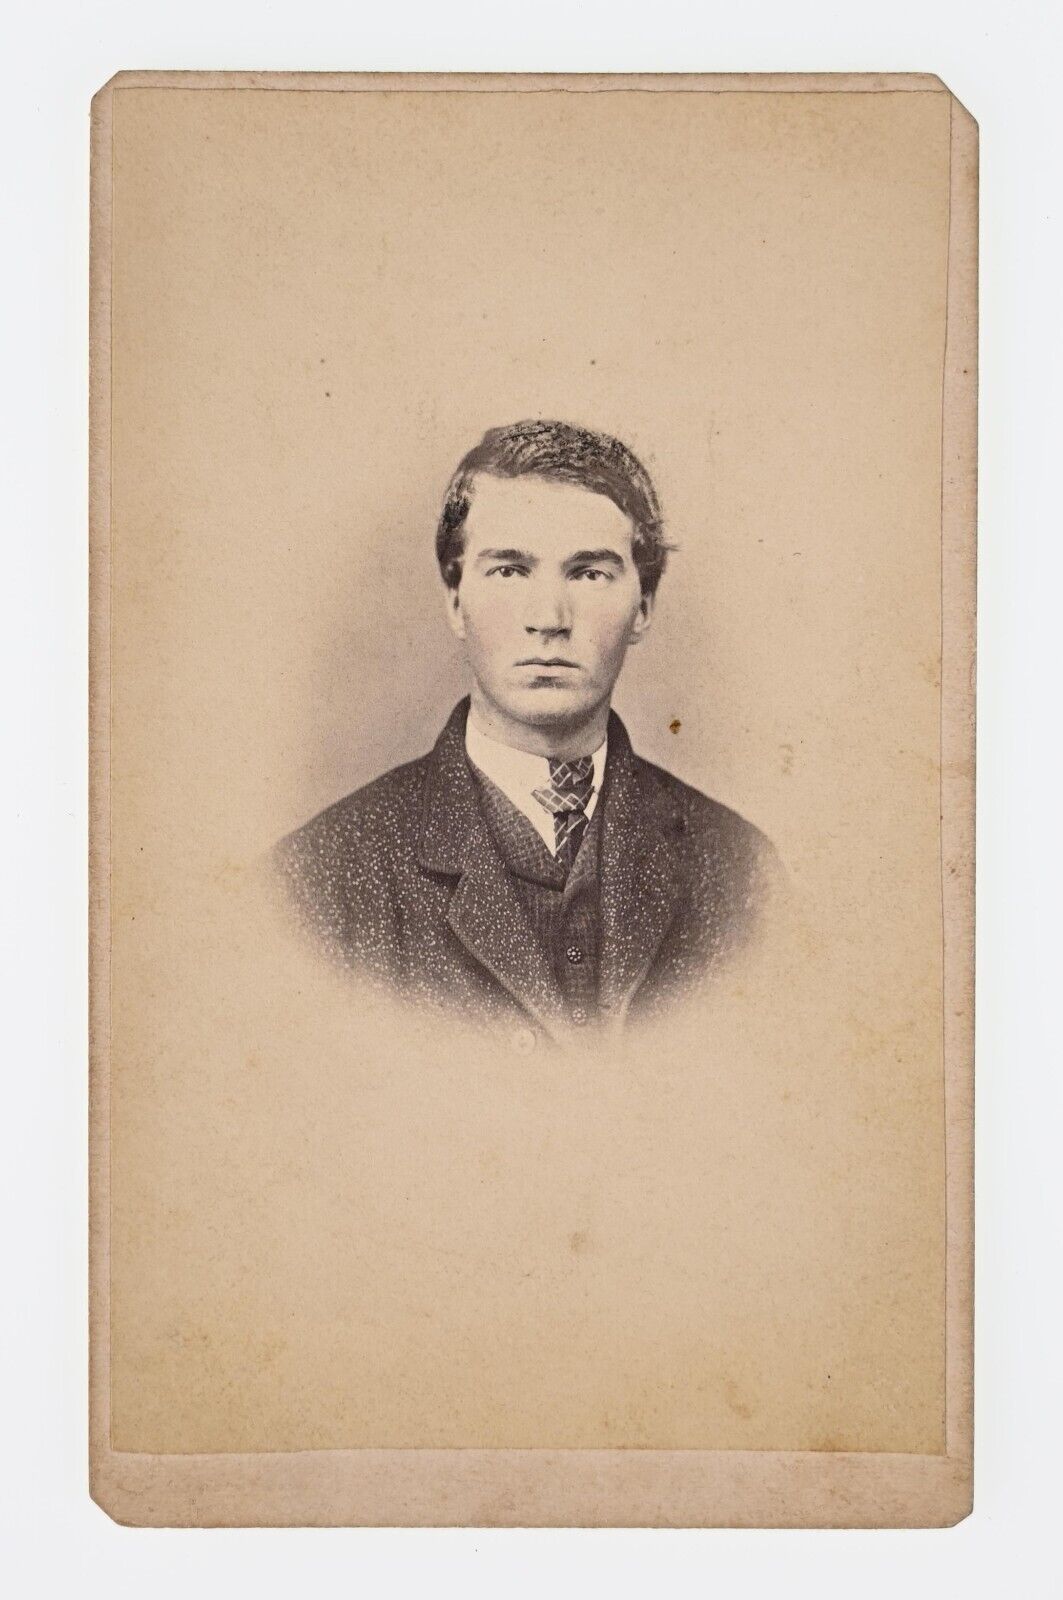 ANTIQUE CDV CIRCA 1860s L.D. JONES HANDSOME YOUNG MAN IN SUIT ADAMS COUNTY PA.